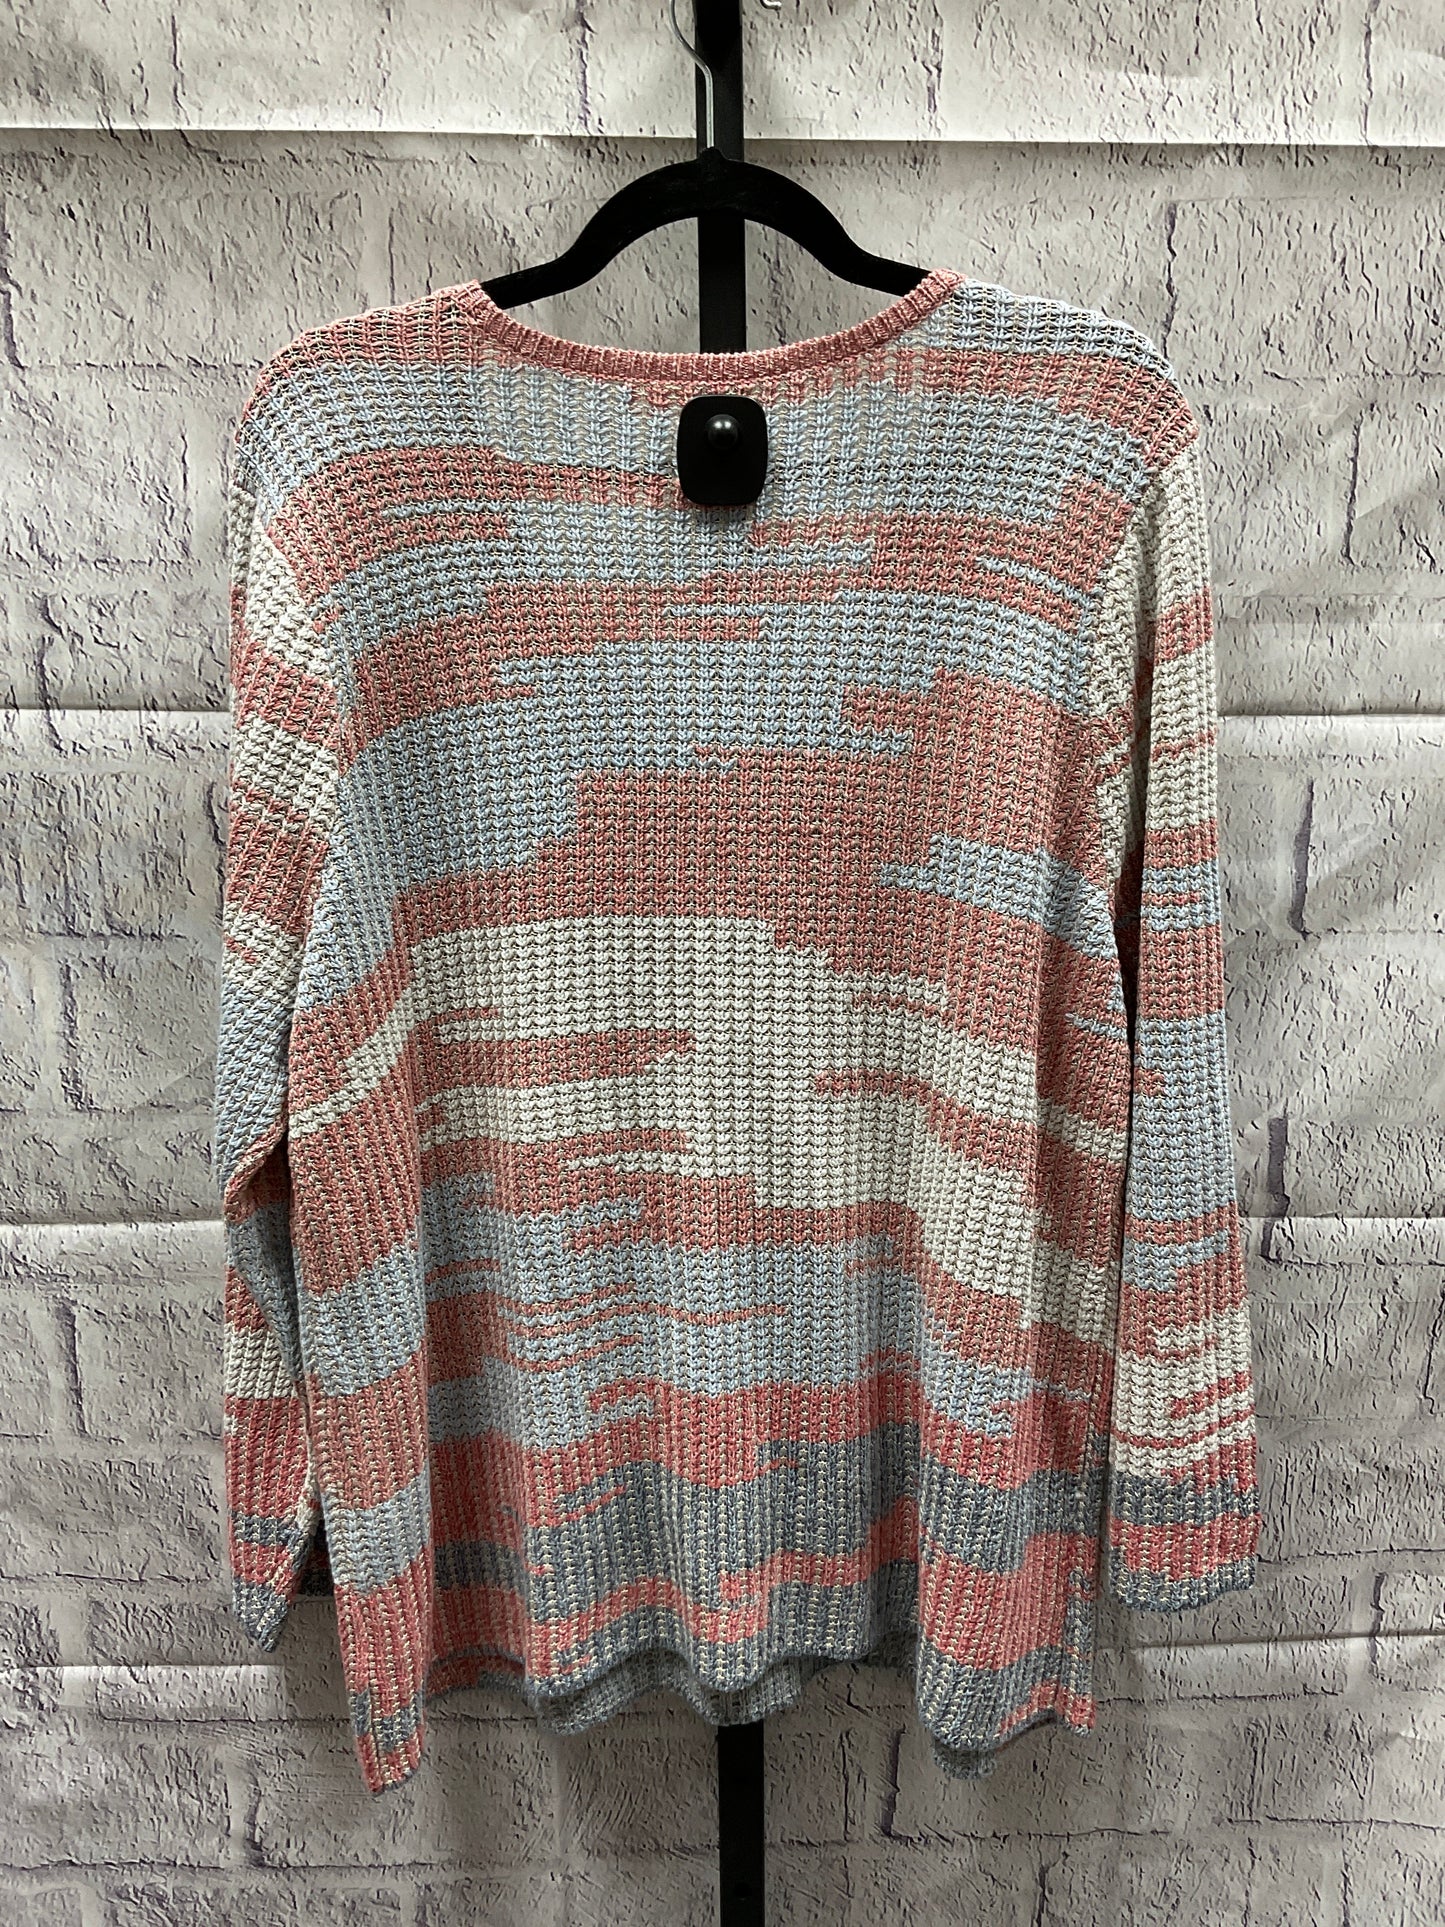 Sweater By Nic + Zoe  Size: 1x